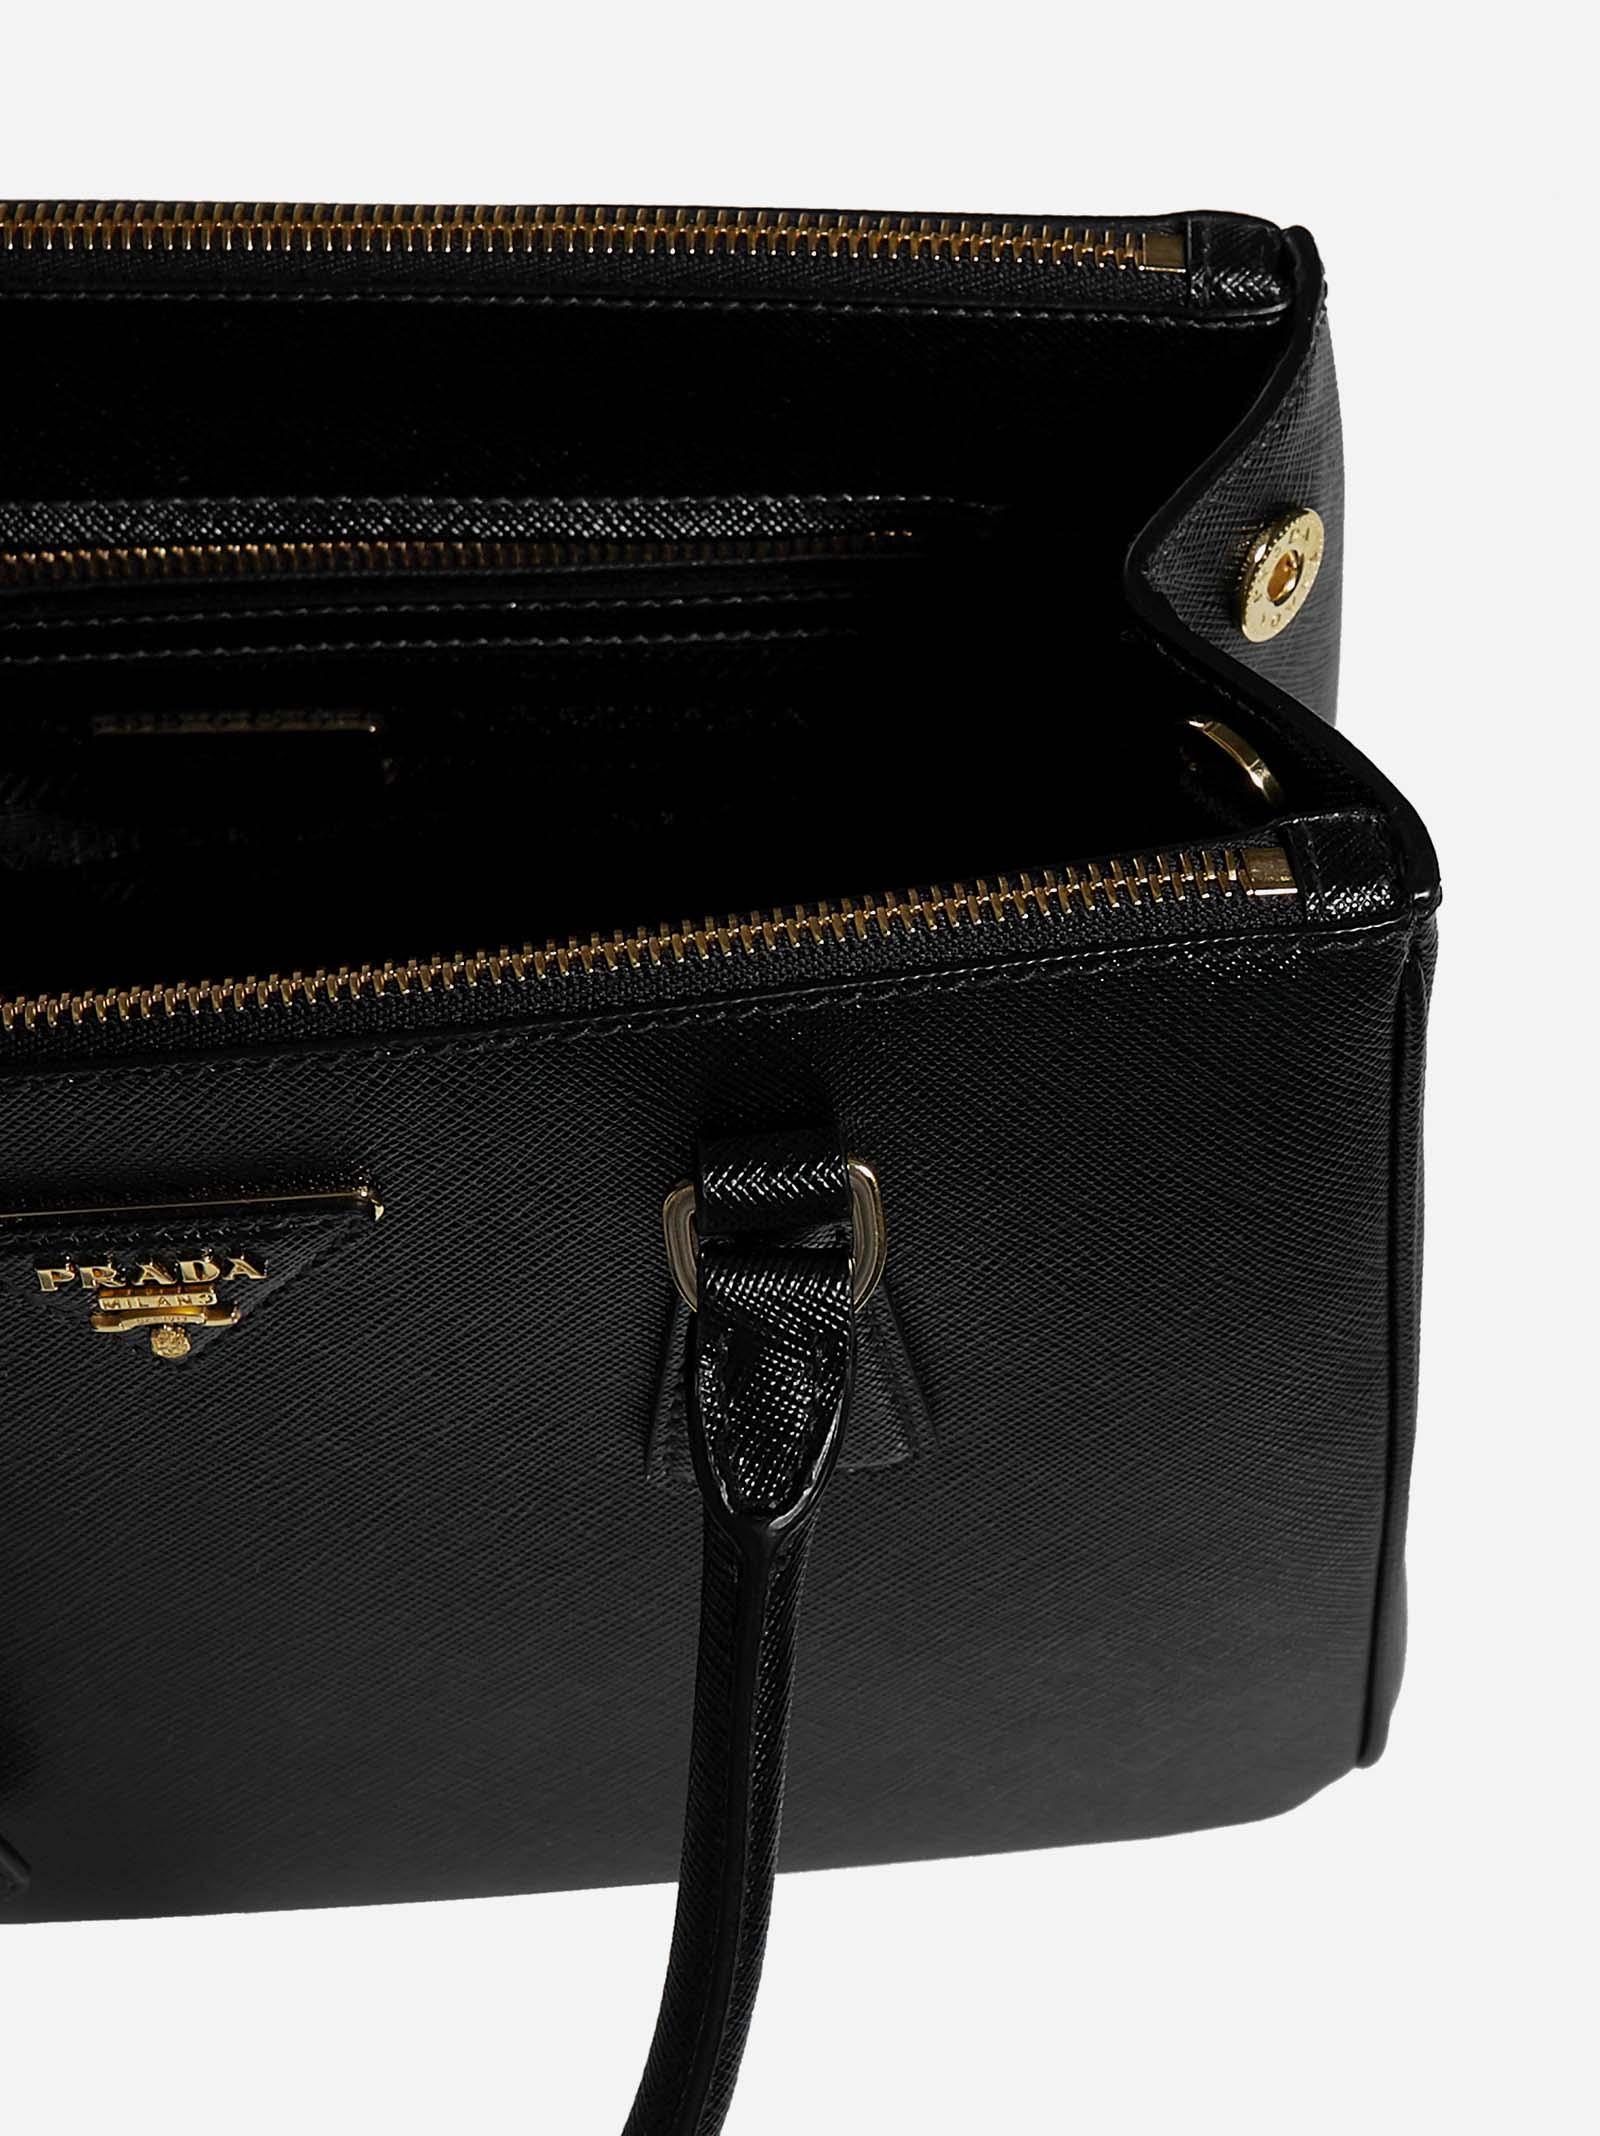 Prada Galleria Mini Saffiano Leather Bag in Black